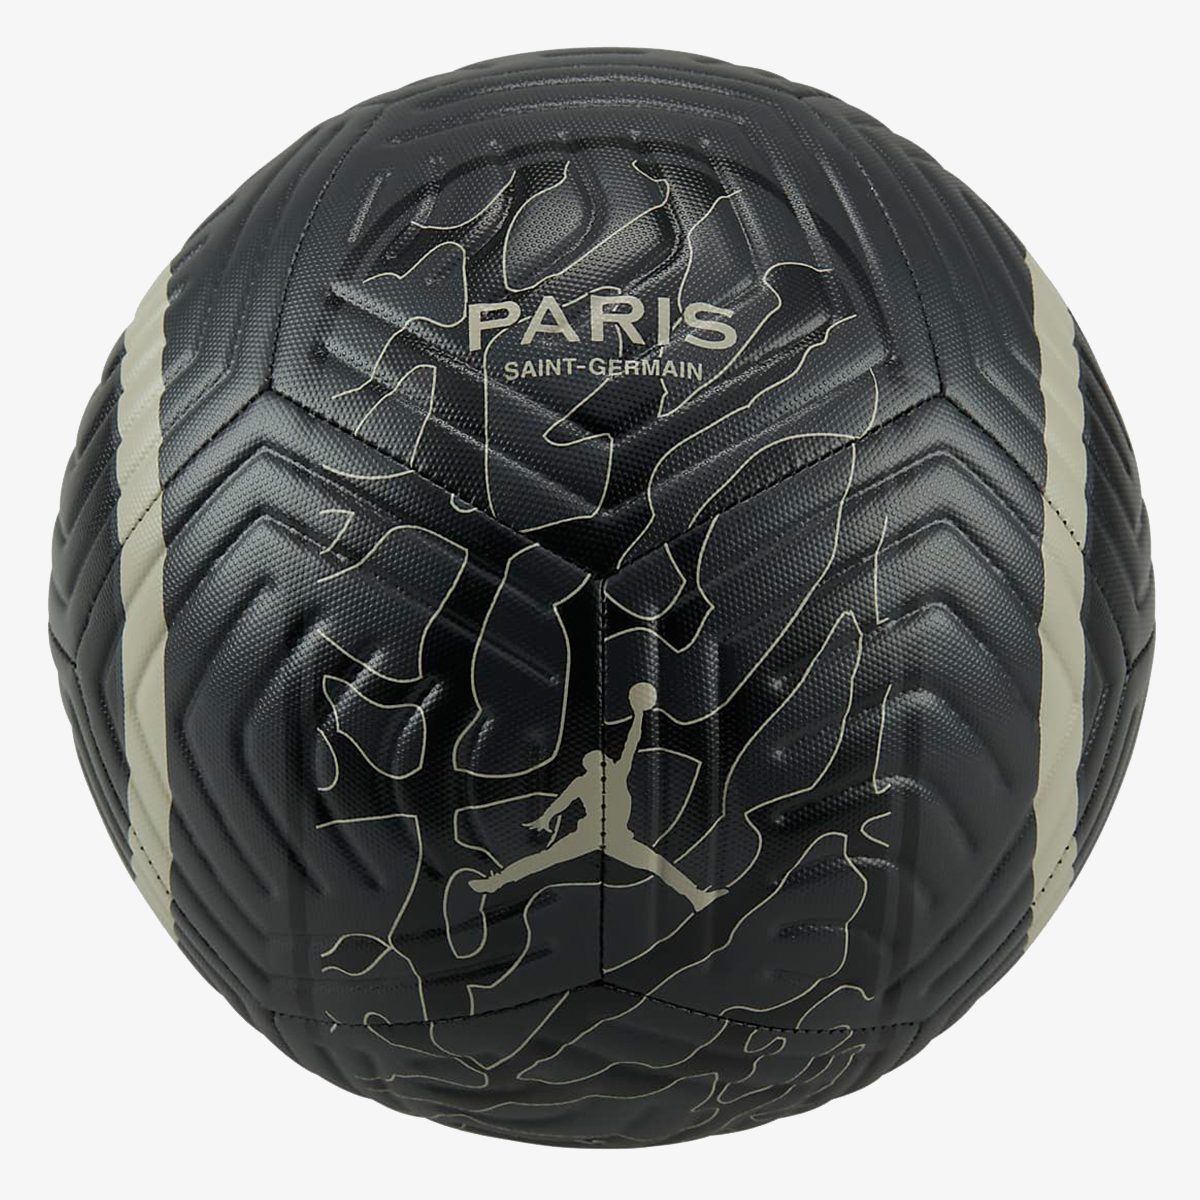 NIKE BALL Paris Saint-Germain Academy 